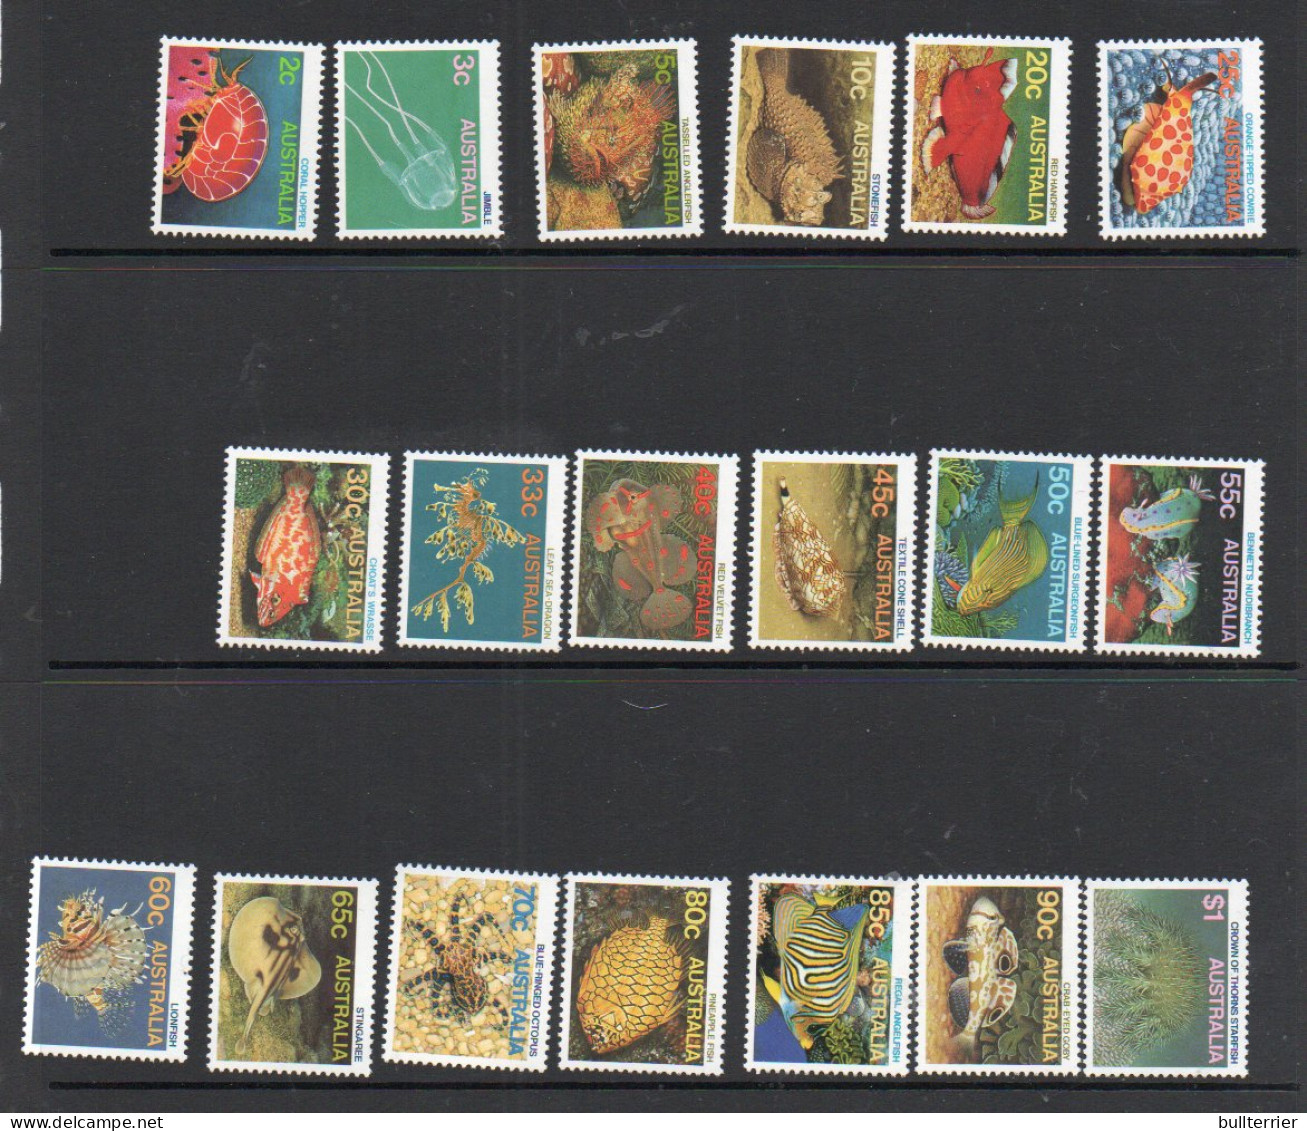 AUSTRALIA - 1984 - MARINE LIFE SET OF 19  MINT NEVER HINGED - Mint Stamps